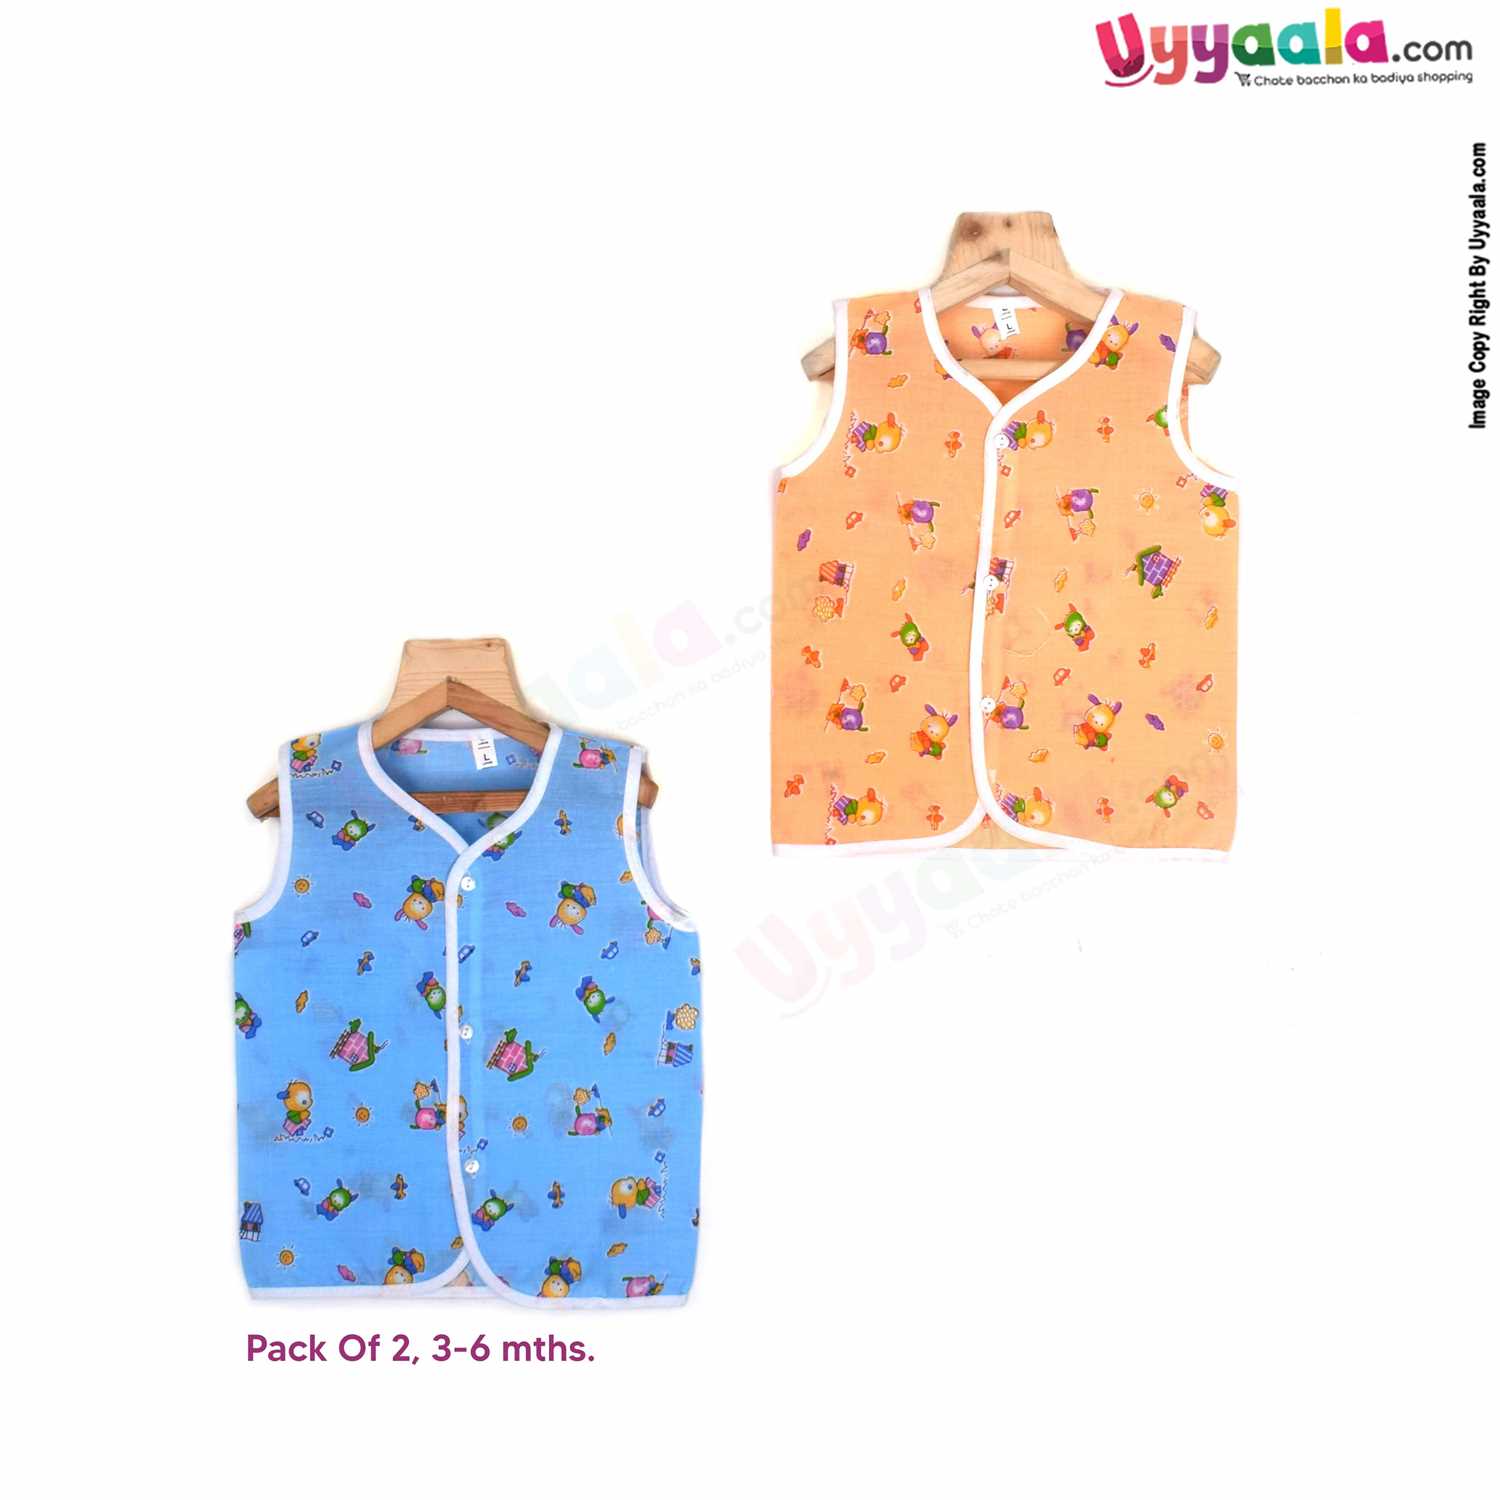 SNUG UP Sleeveless Baby Jabla Set, Front Opening Button Model, Premium Quality Cotton Baby Wear, Bear Print, (3-6M), 2Pack - Blue & Orange